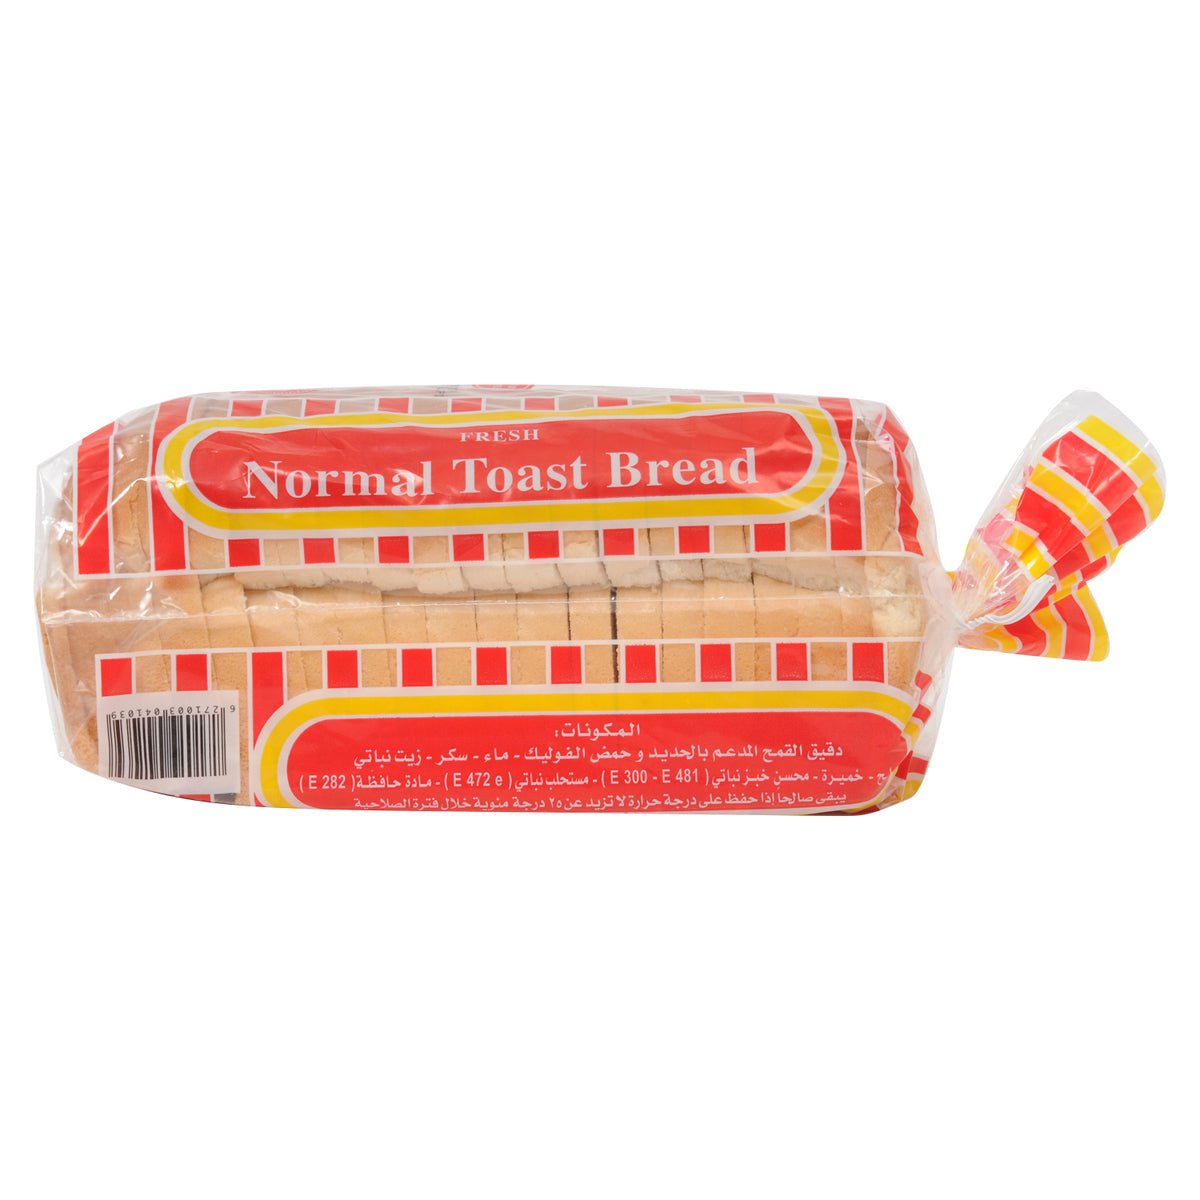 NTB White Sliced Loaf